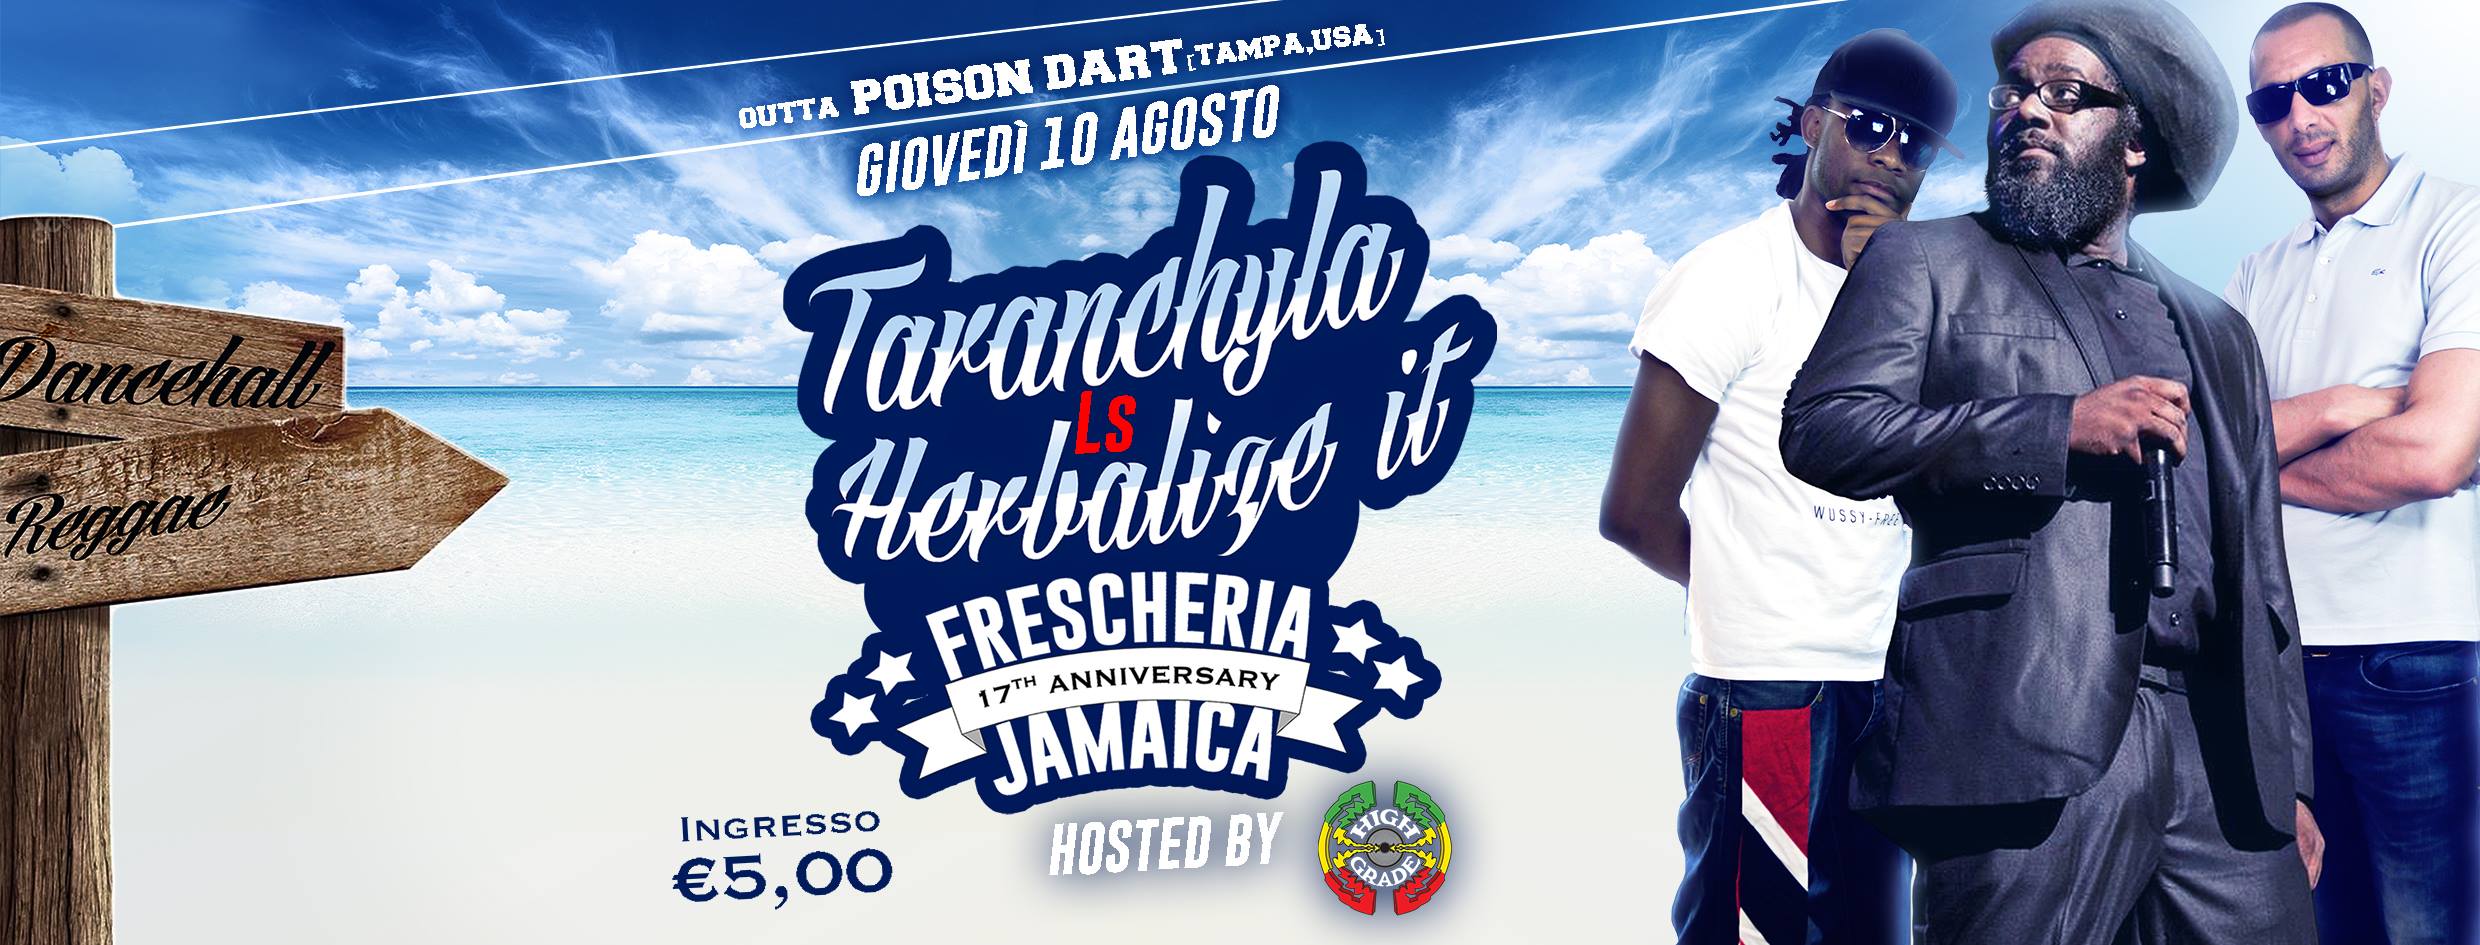 Taranchyla Usa - ls Herbalize It Nl @Frescheria Jamaica